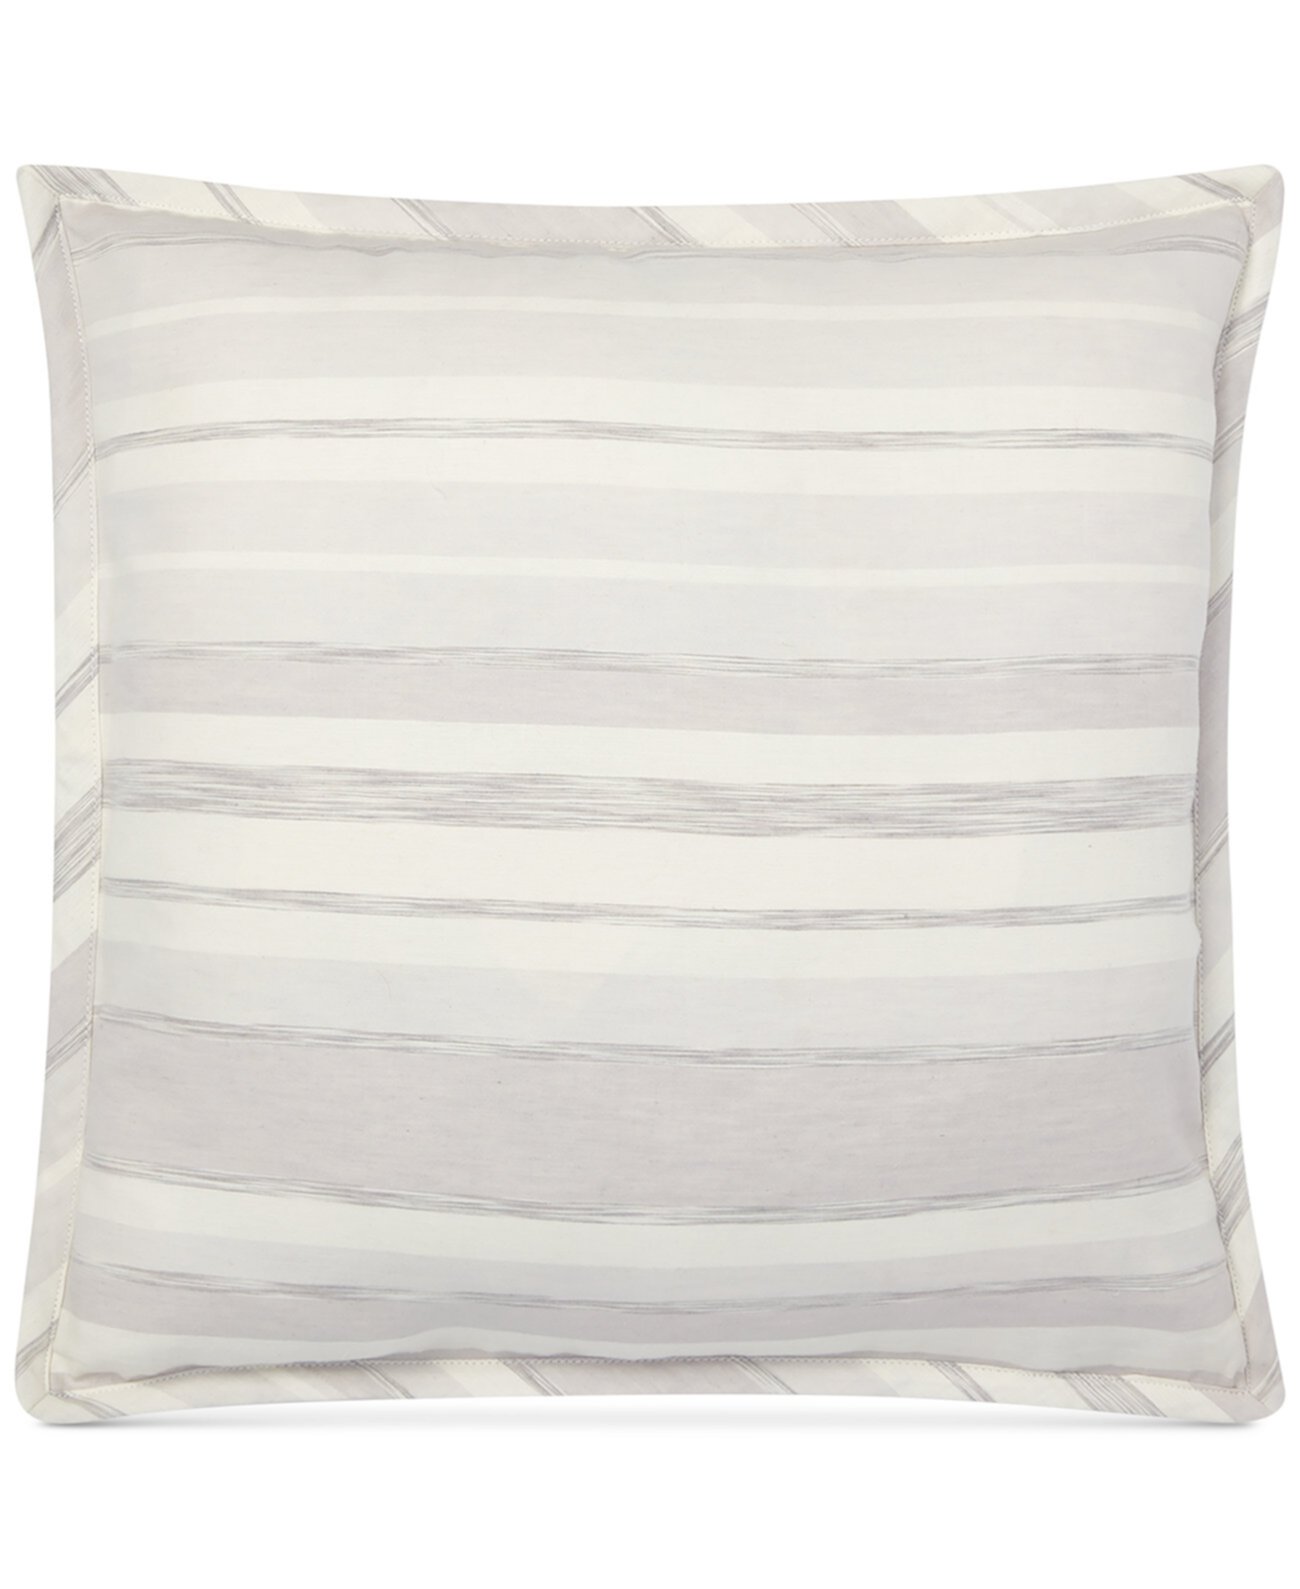 Квадратная декоративная подушка Allaire Stripe, 18 дюймов Ralph Lauren